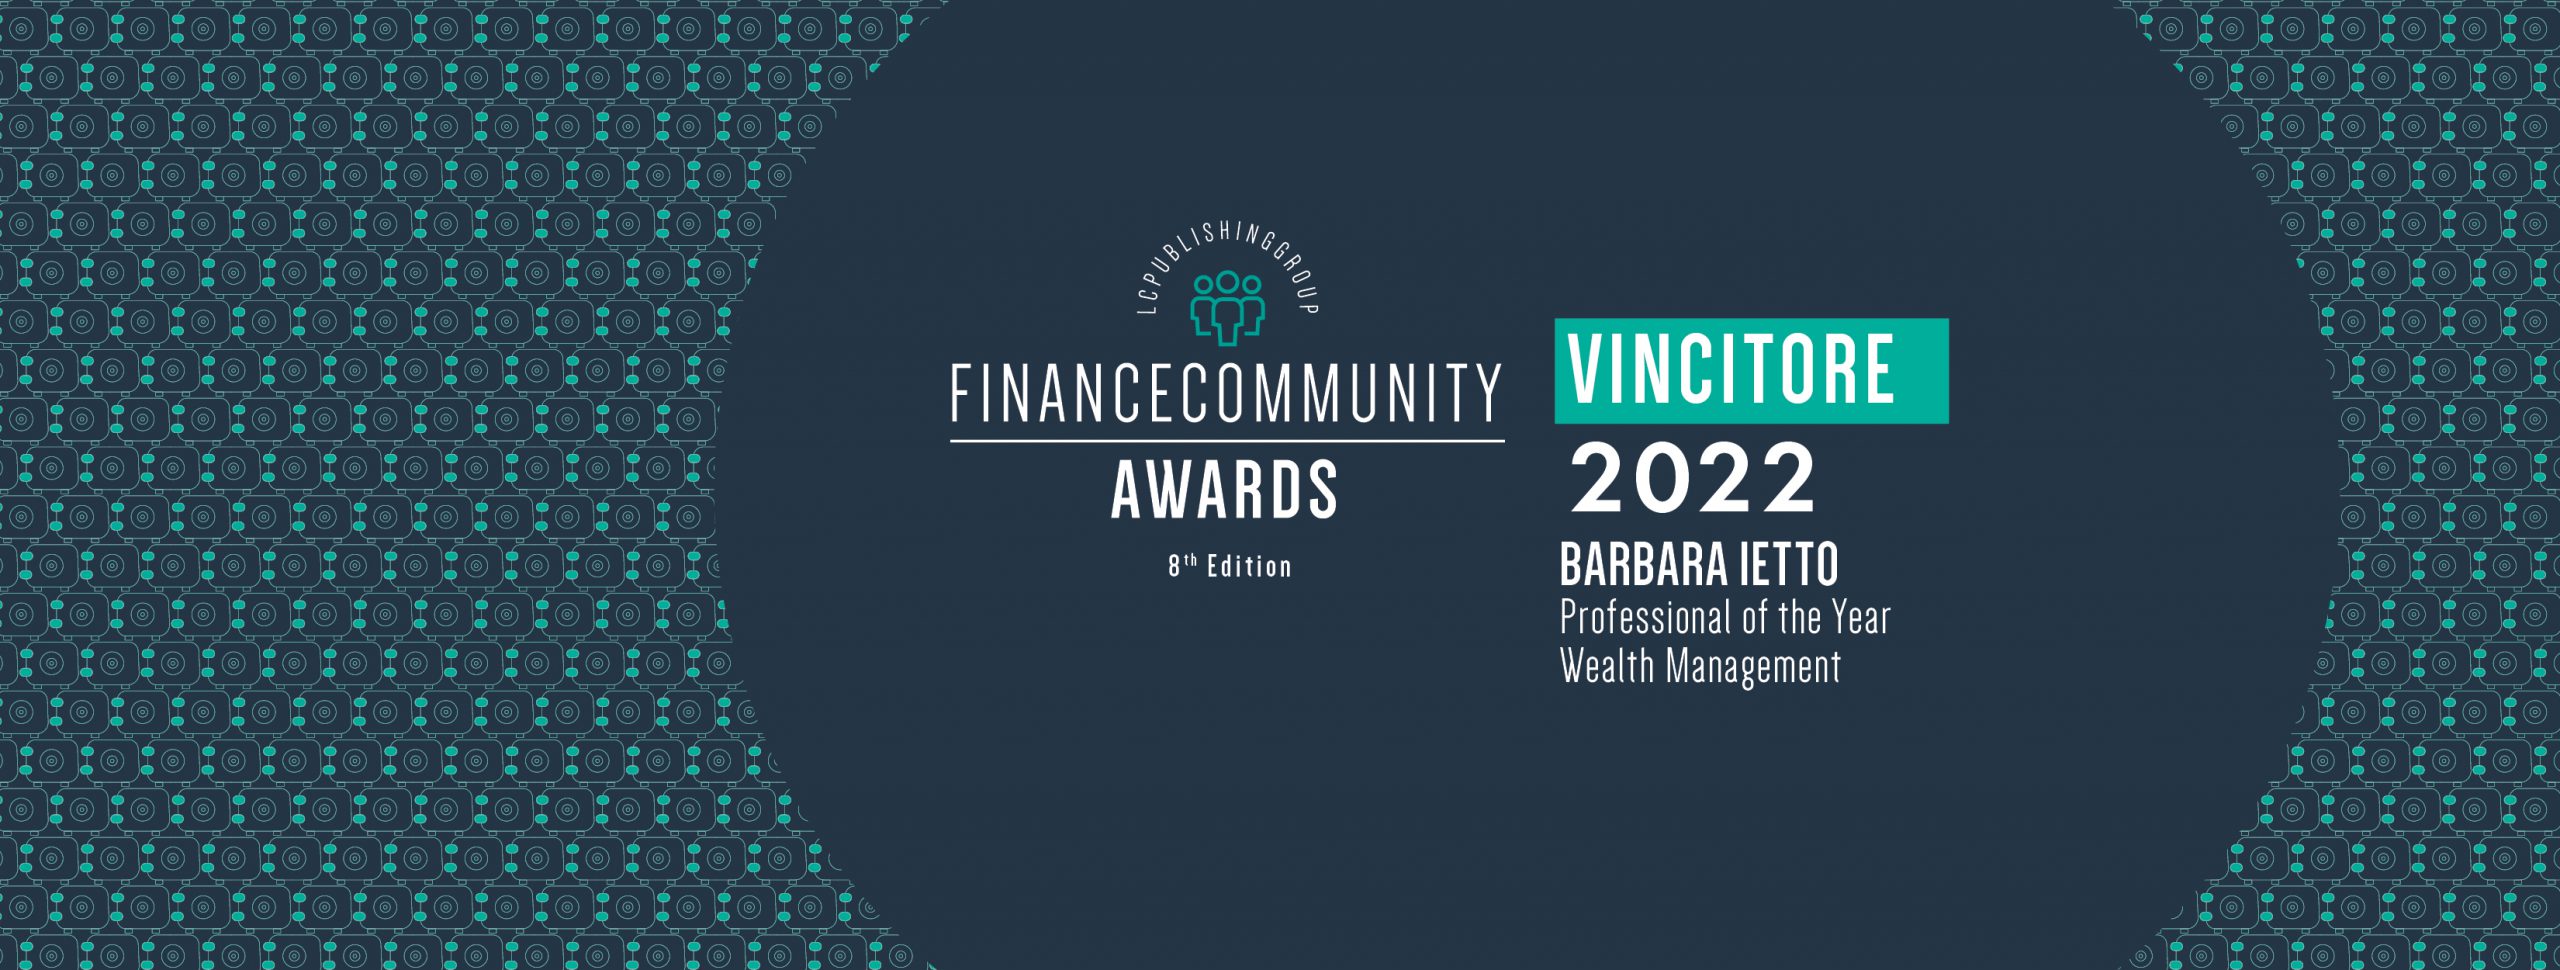 Finance Community Awards 2022